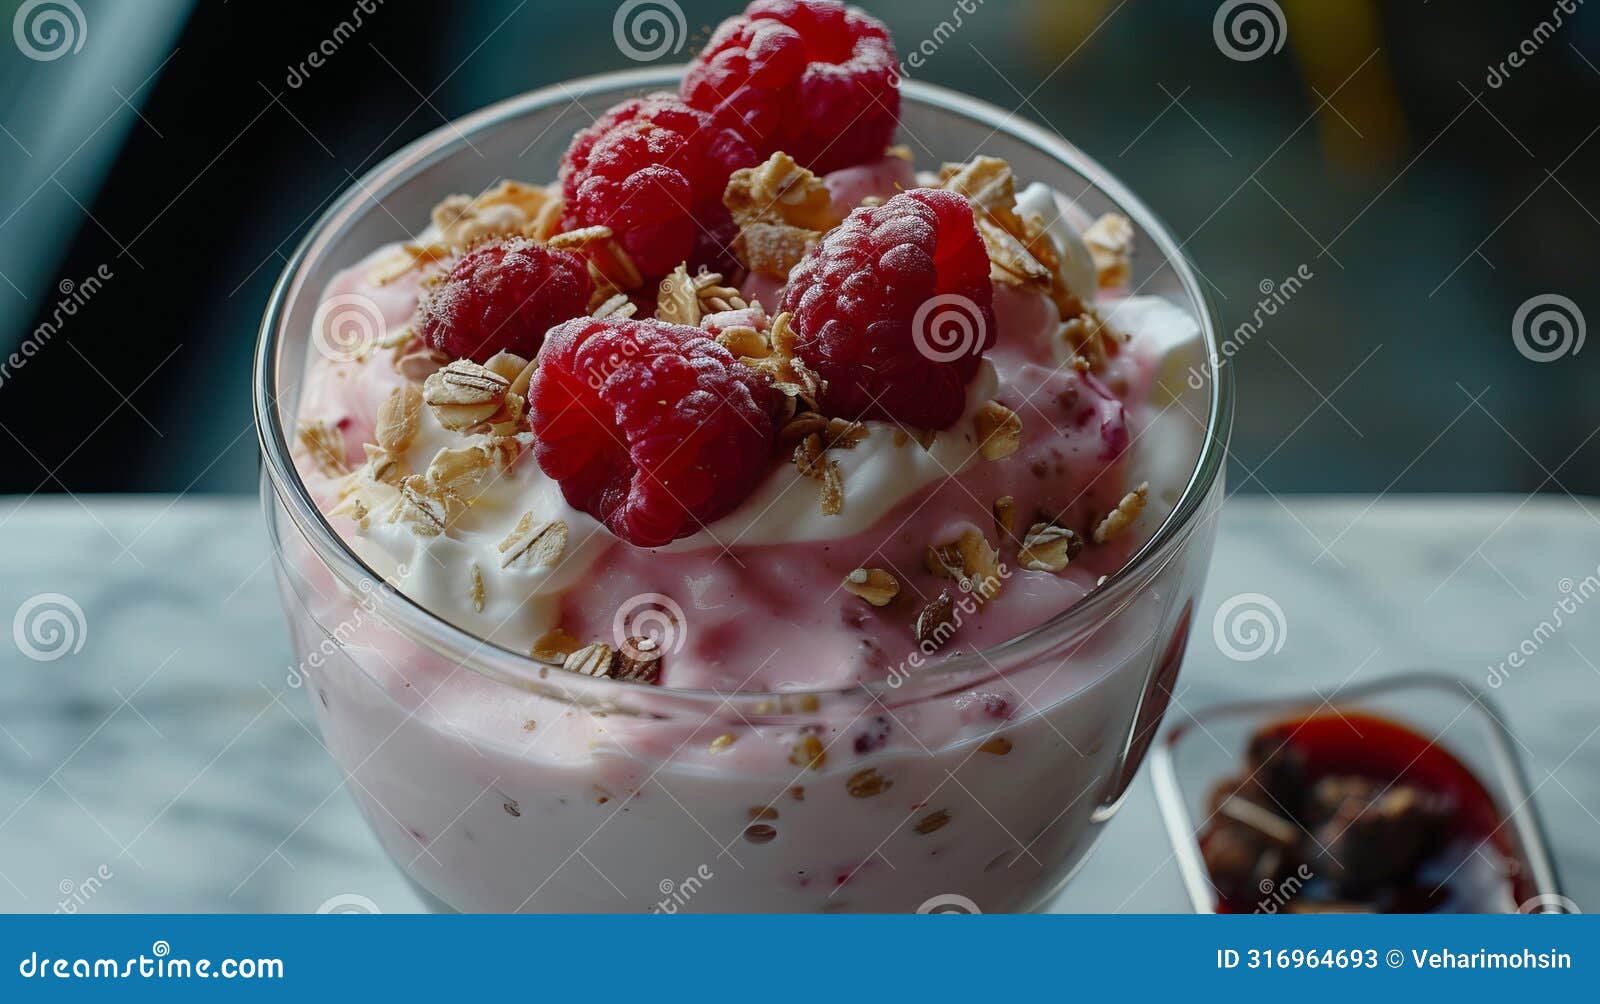 freshness and sweetness in a bowl of raspberry yogurt parfait